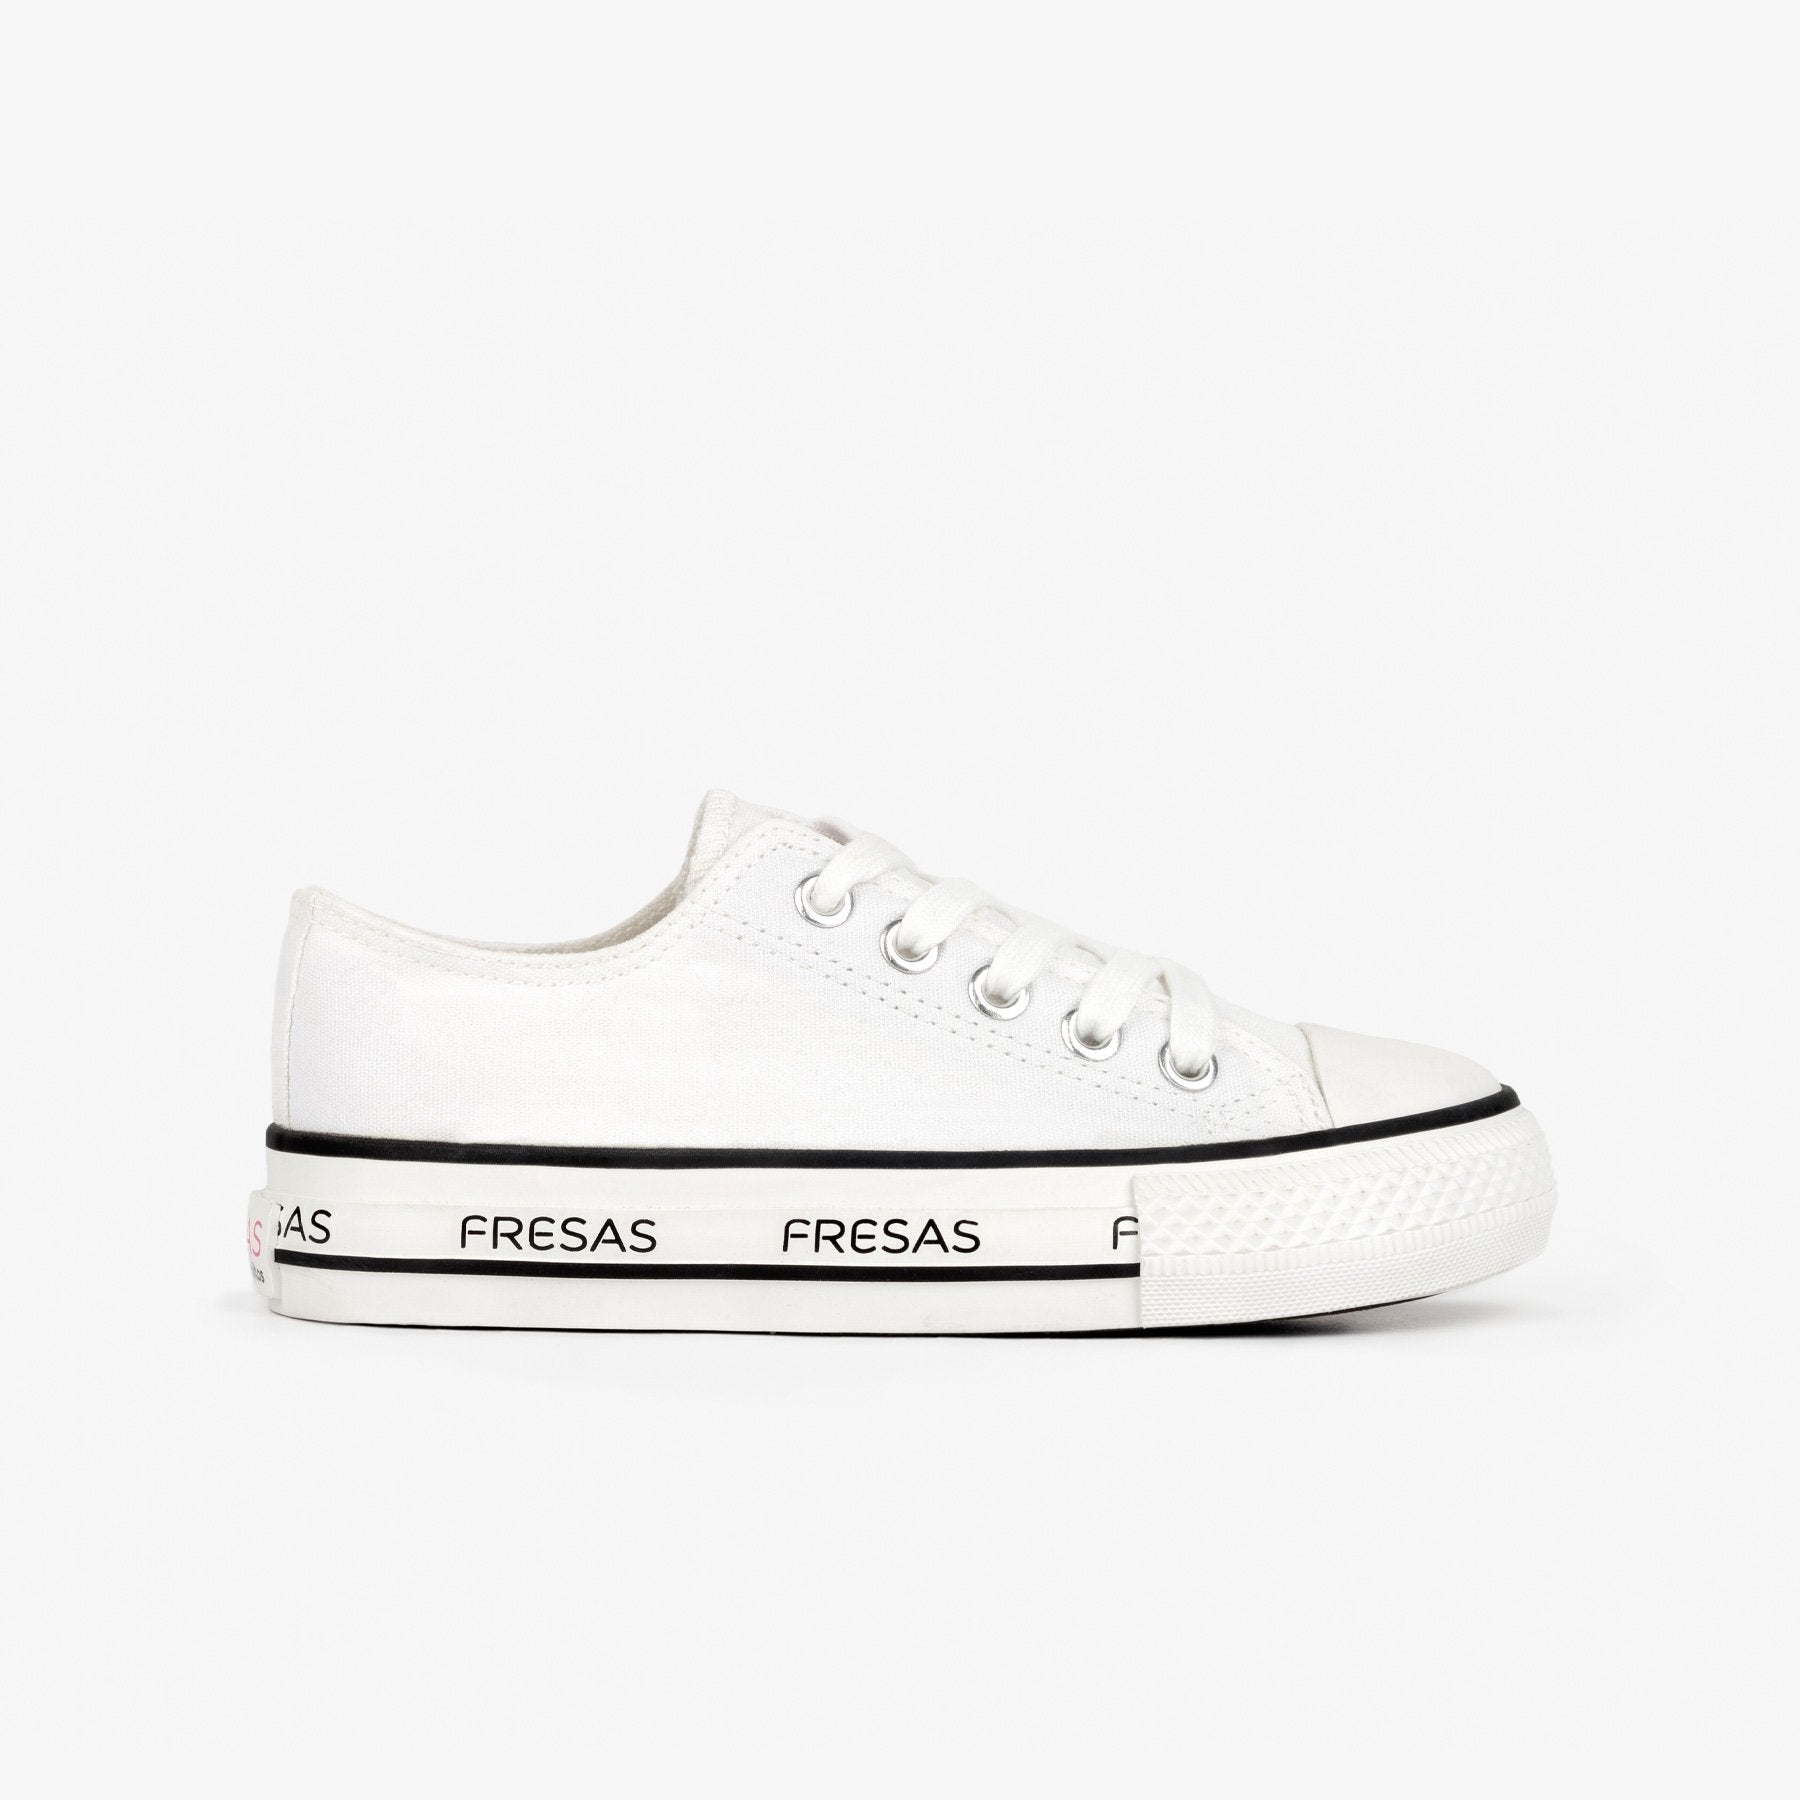 FRESAS CON NATA Shoes Girl's White Canvas Platform Sneakers